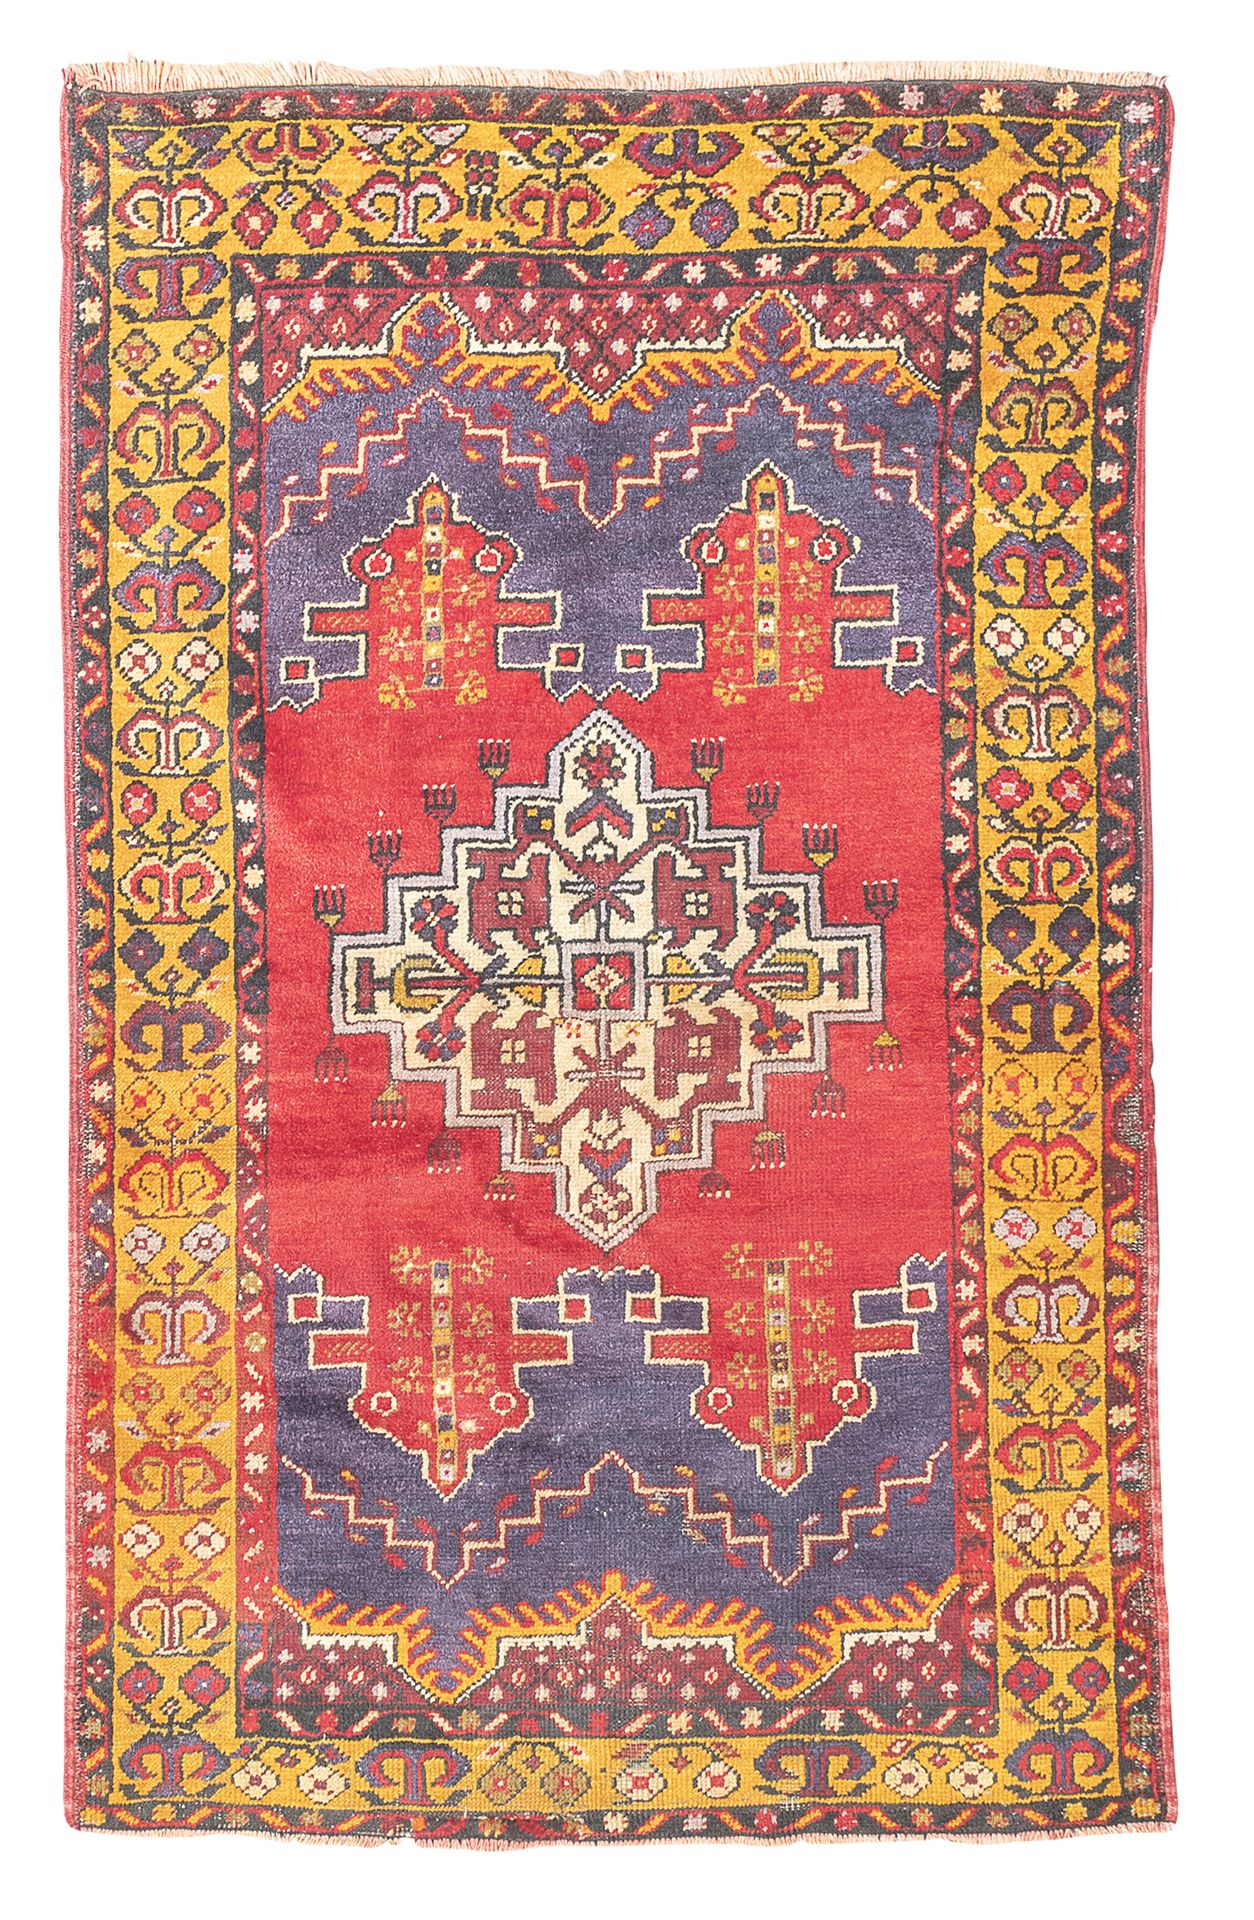 Null 安纳托利亚塞纳卡莱地毯，20世纪初


有一个白色的阶梯状奖章，在中央领域有一个红色的背景。


尺寸为164 x 105厘米。